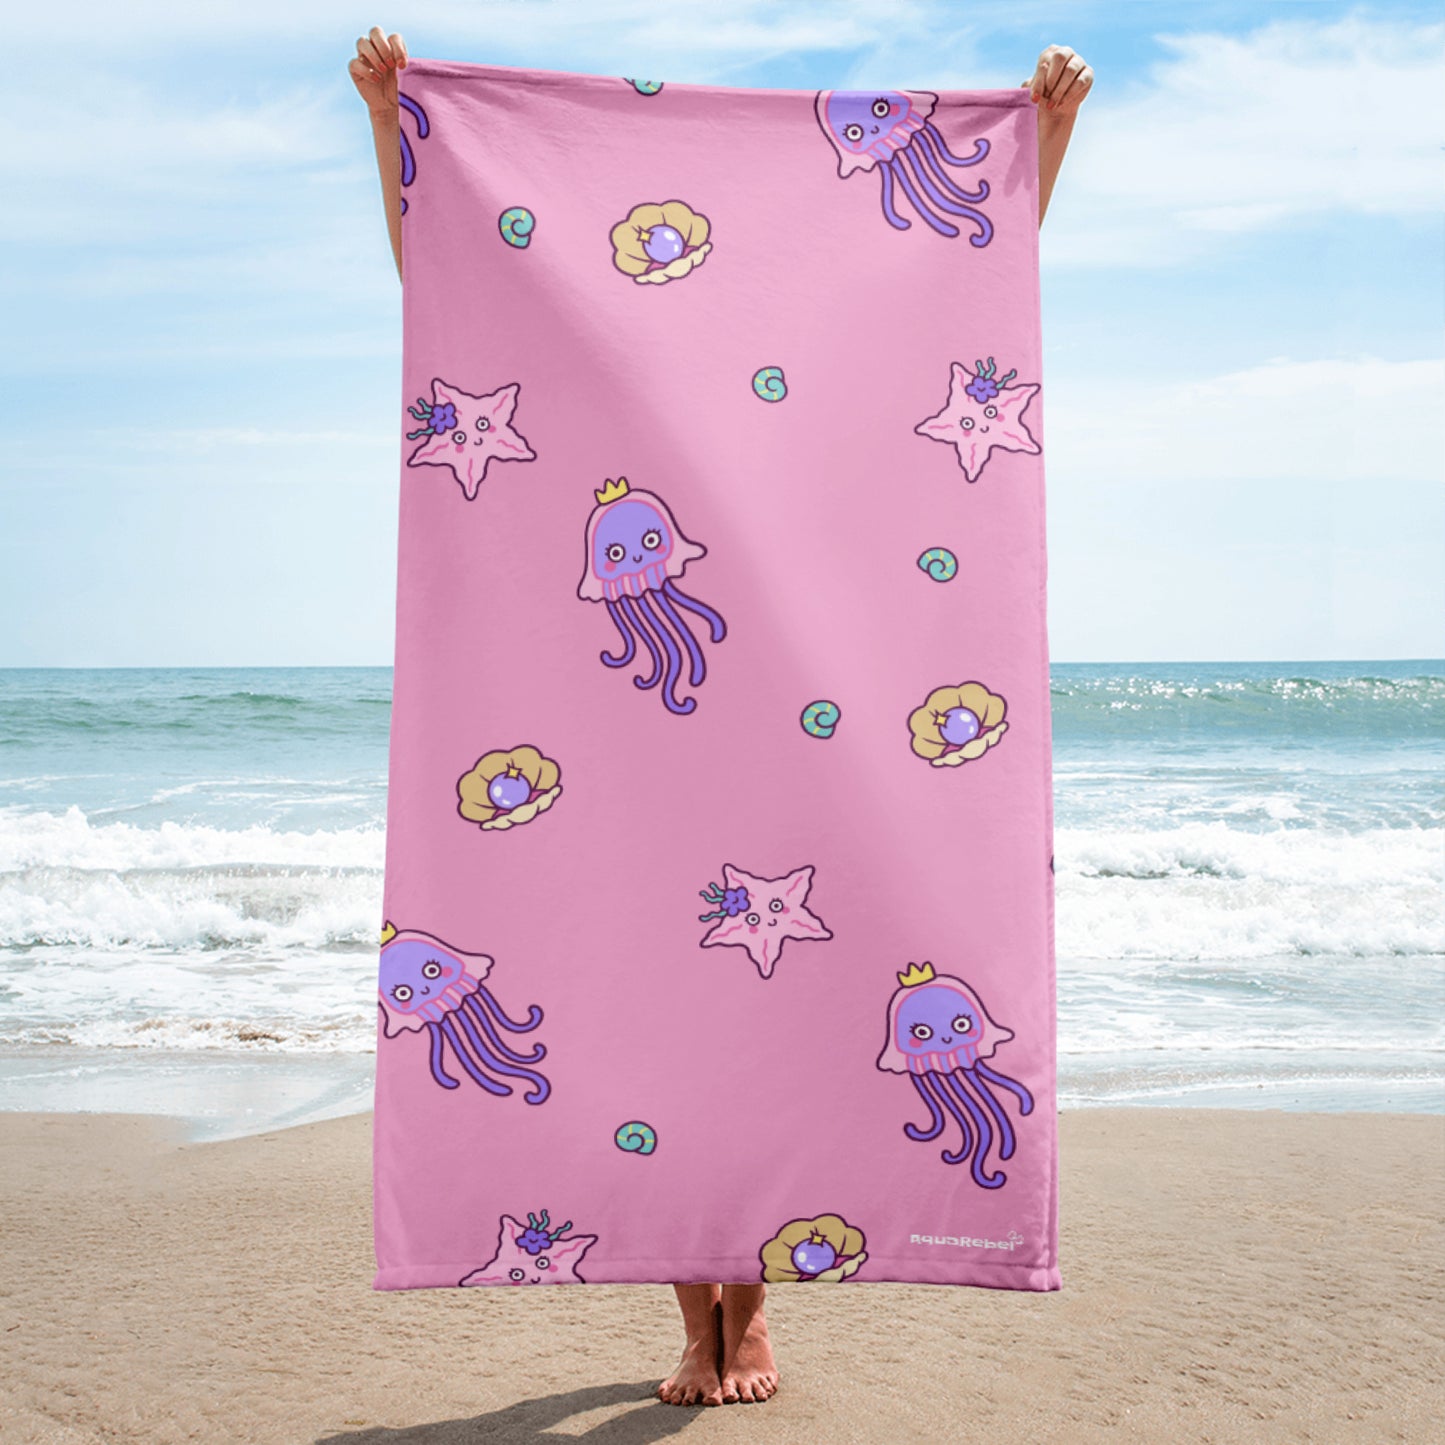 AquaRebel quick-drying beach towel 160x80cm pink